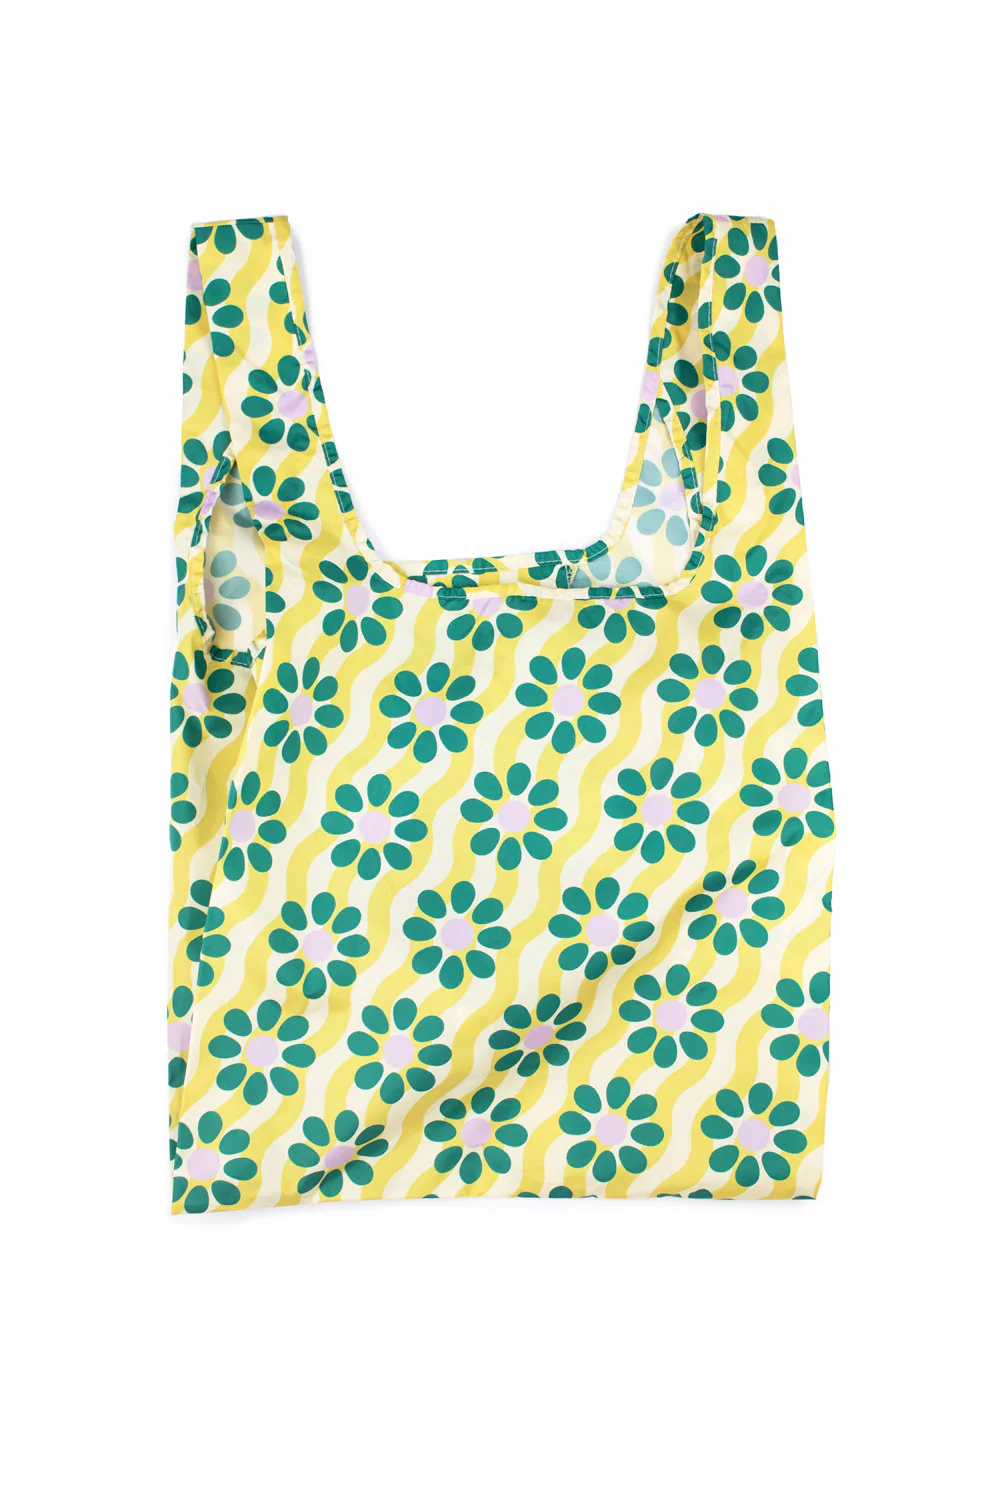 Kind Bag Reusable Shopping Bag - Wavy Daisy